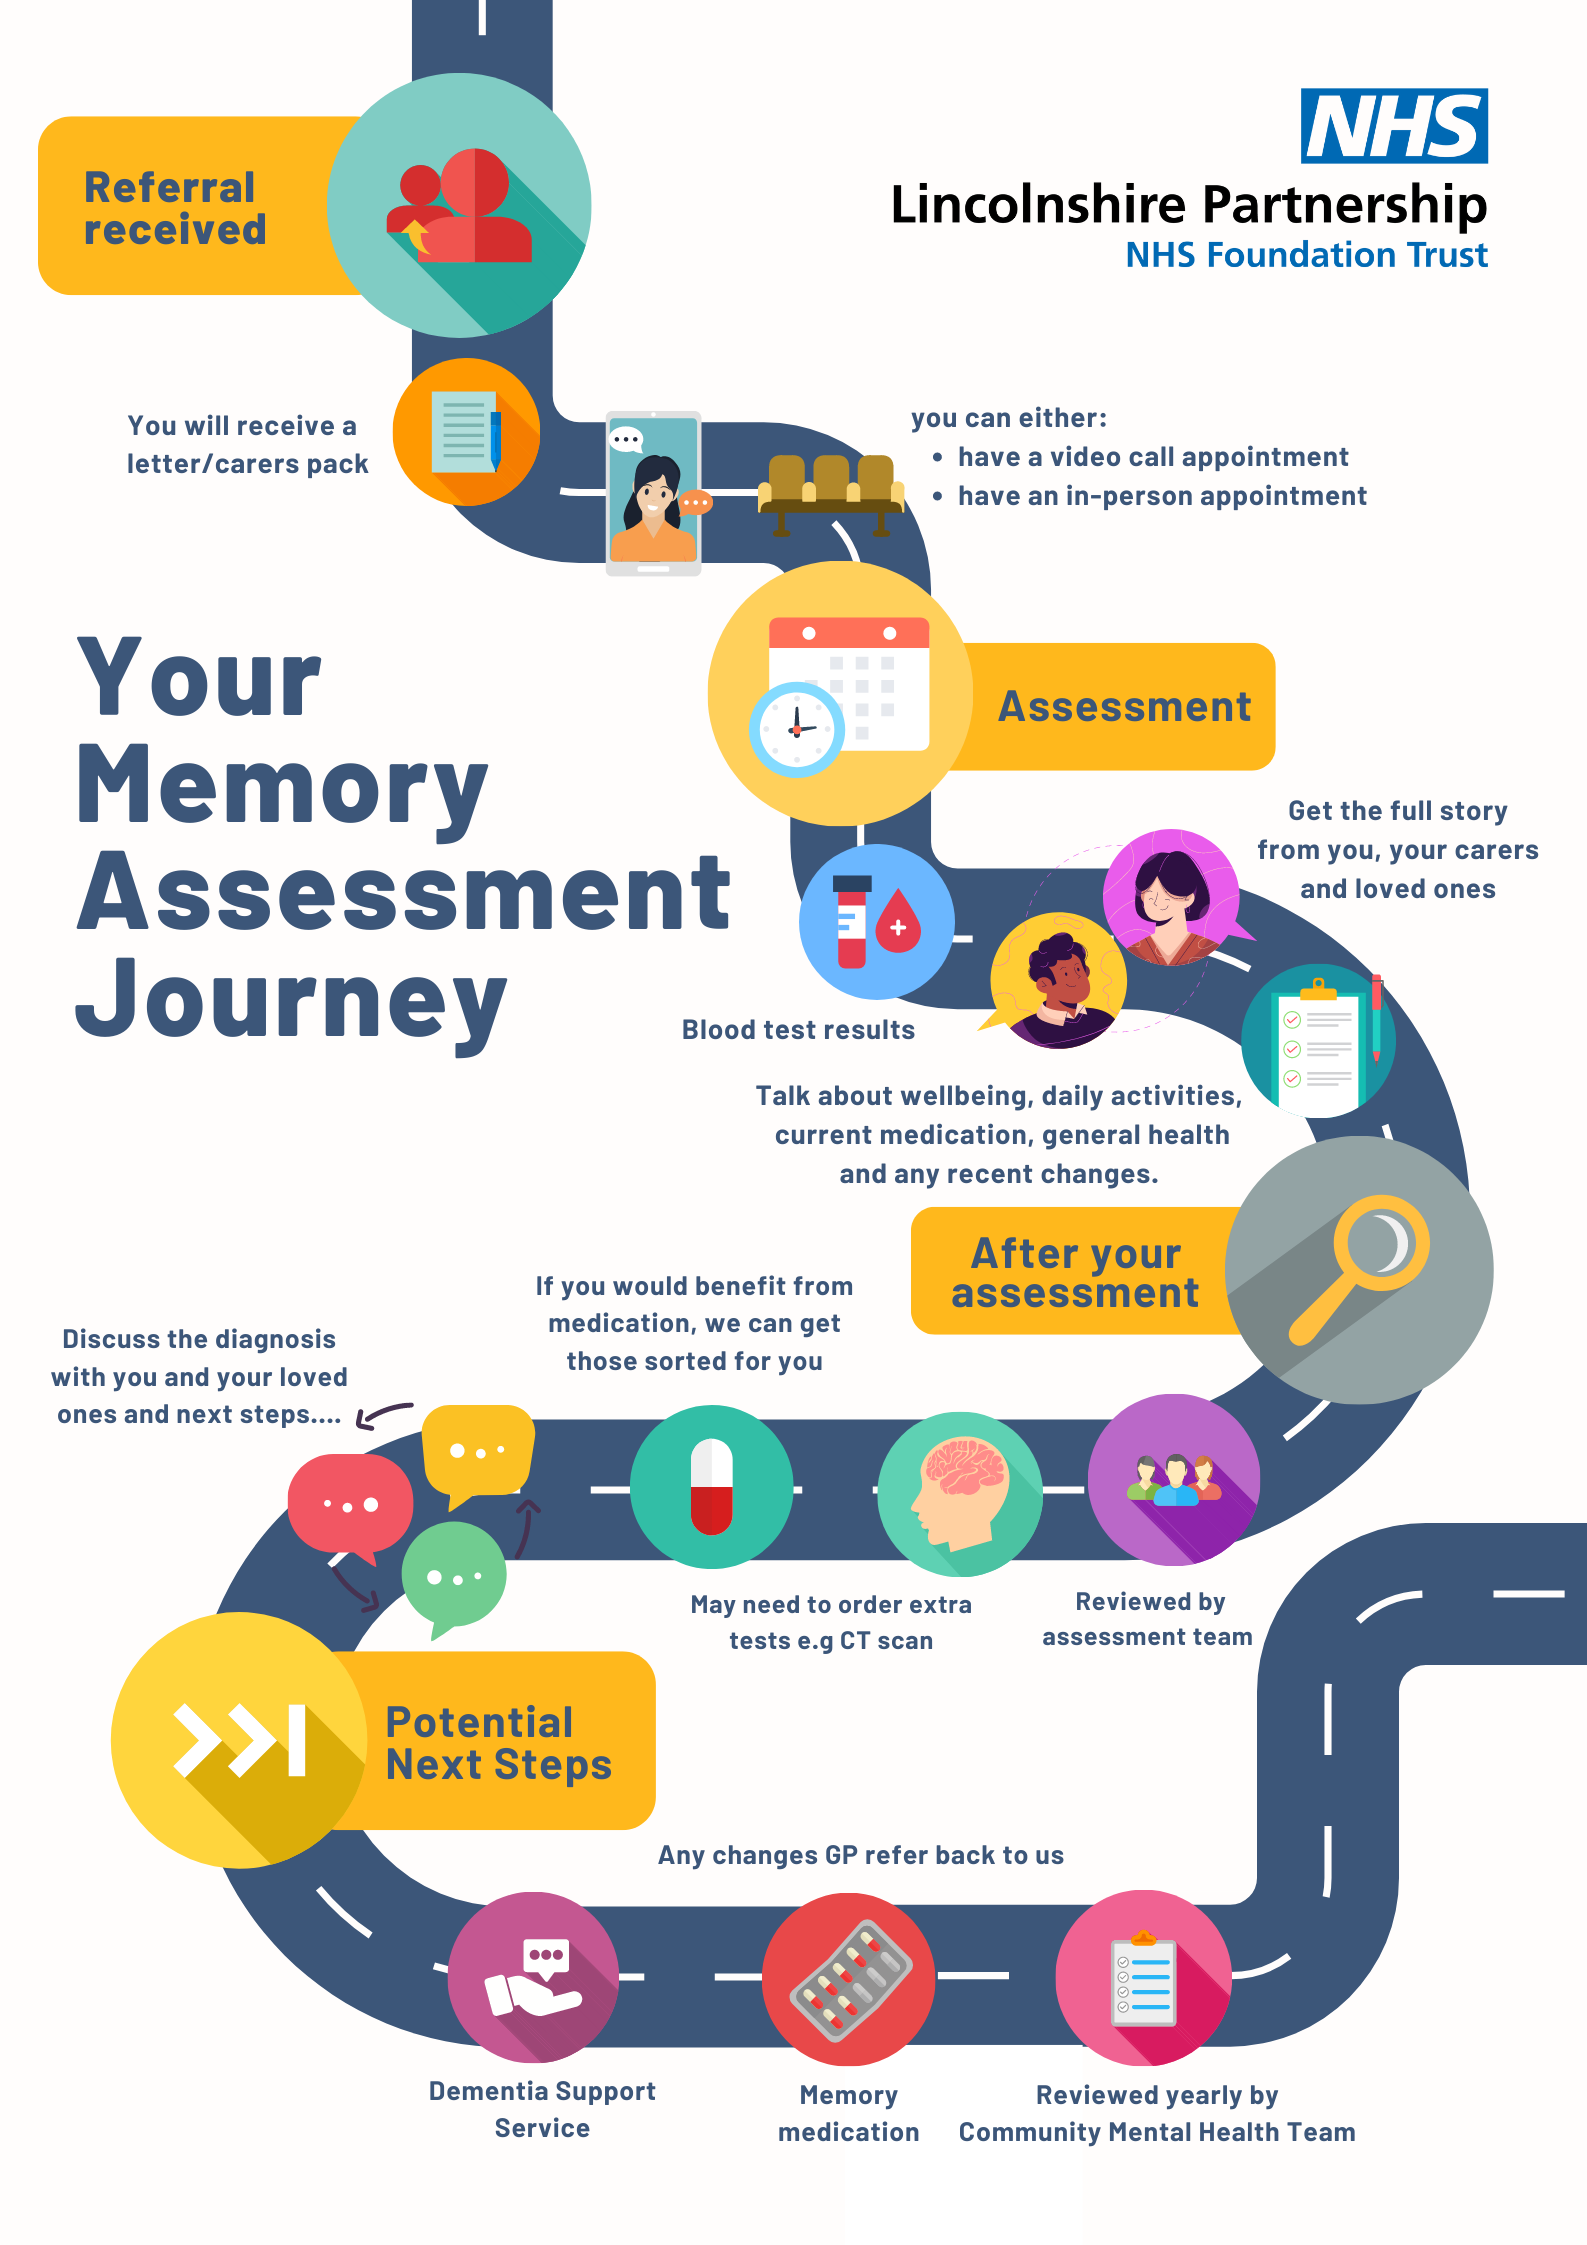 Your memory assessment journey diagram